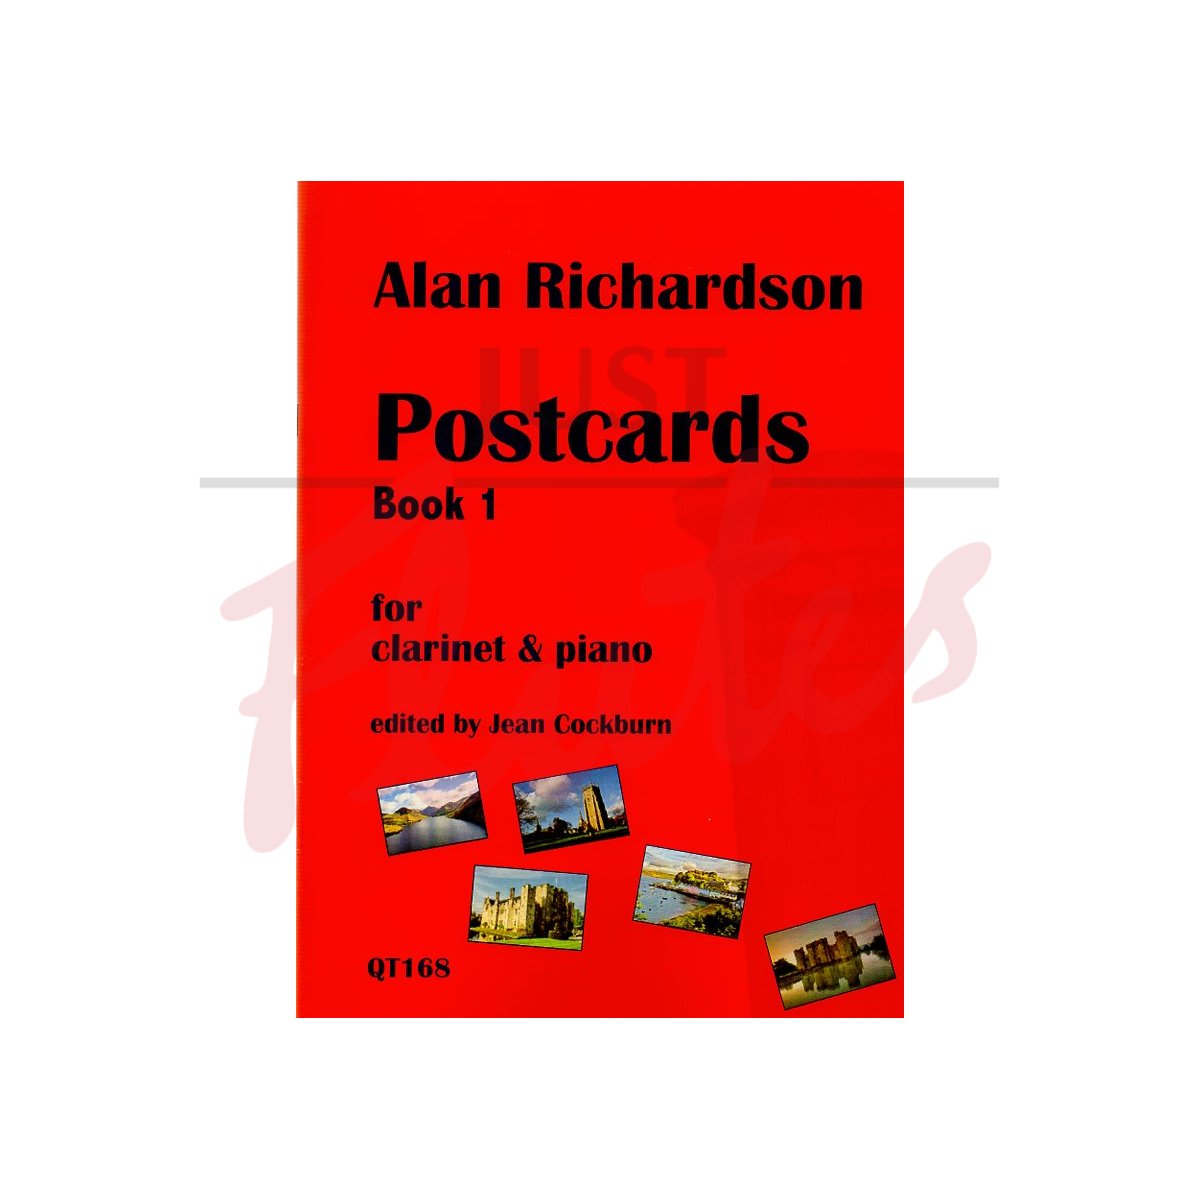 Postcards Book 1